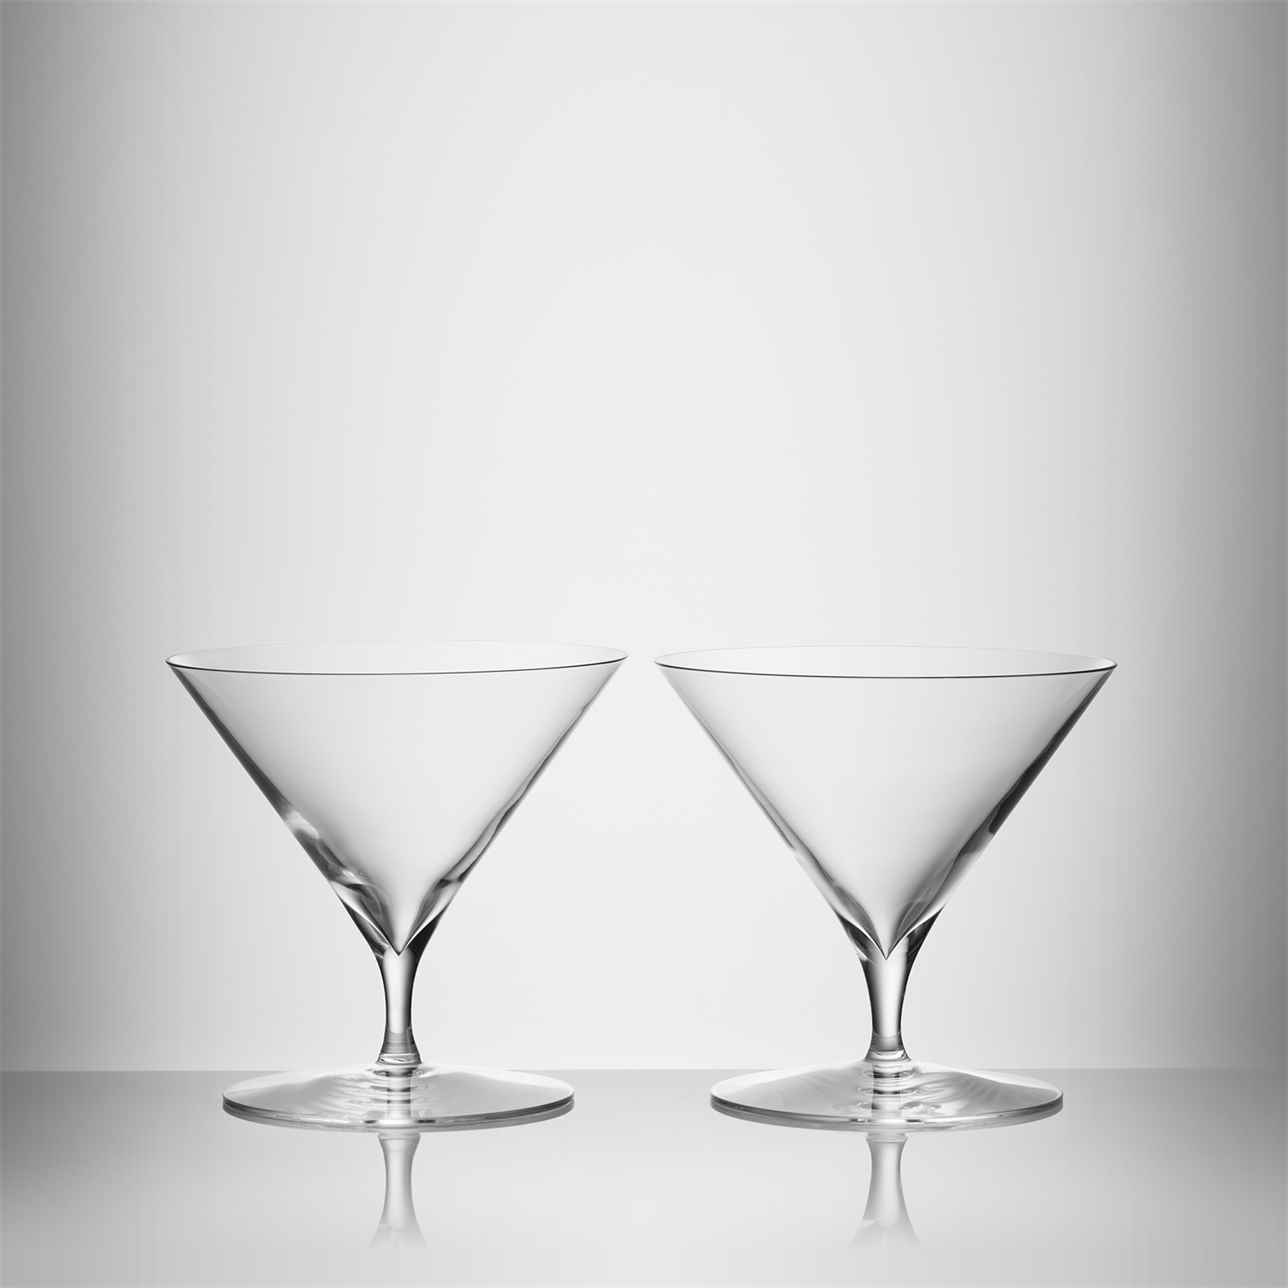  Elegance Martini Glass, Set of 2 